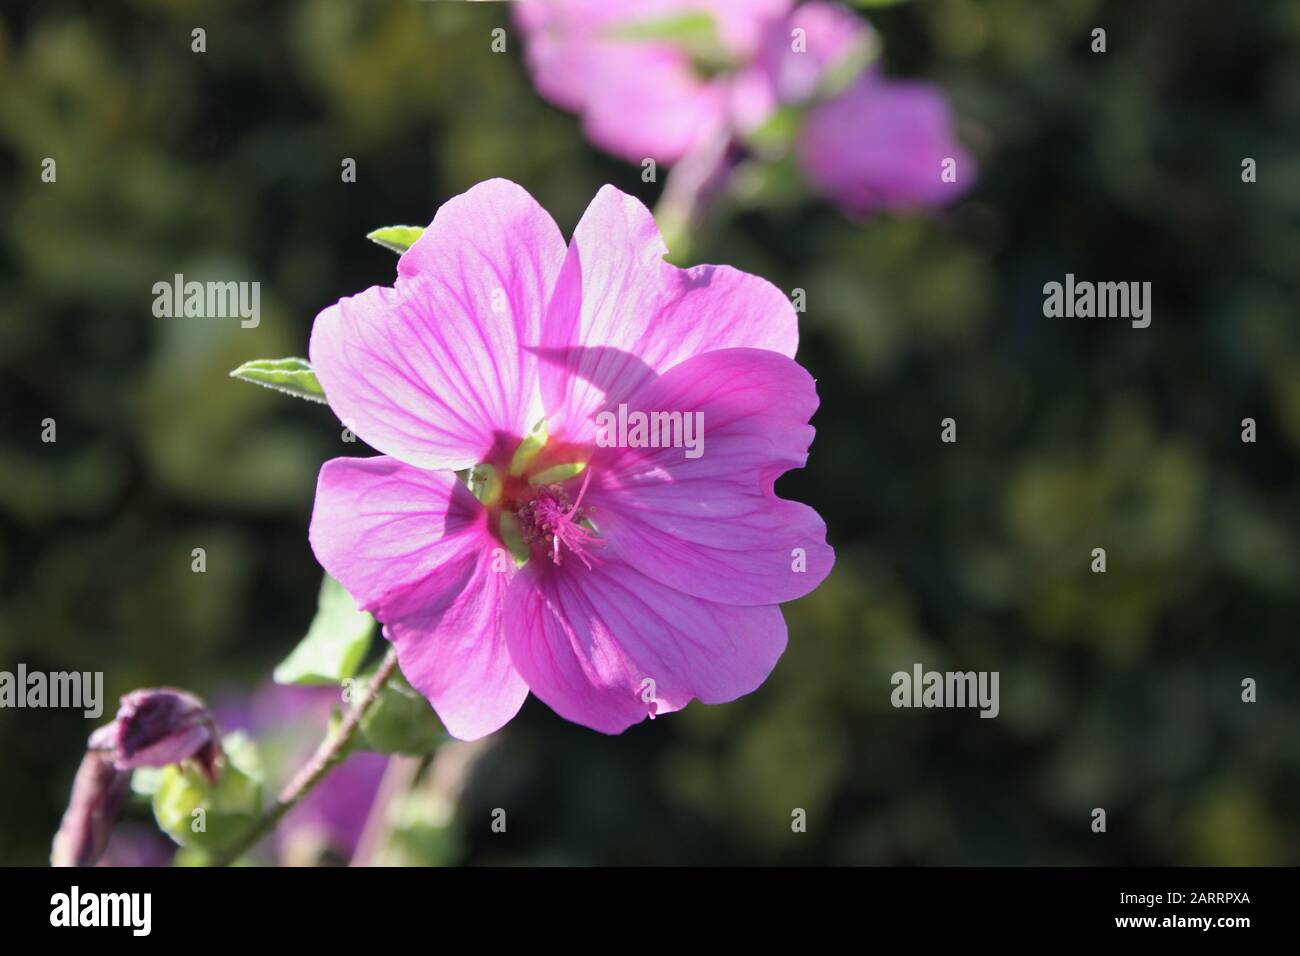 Lavatera x clementii 'Rosea' tree mallow bright pink flower Stock Photo